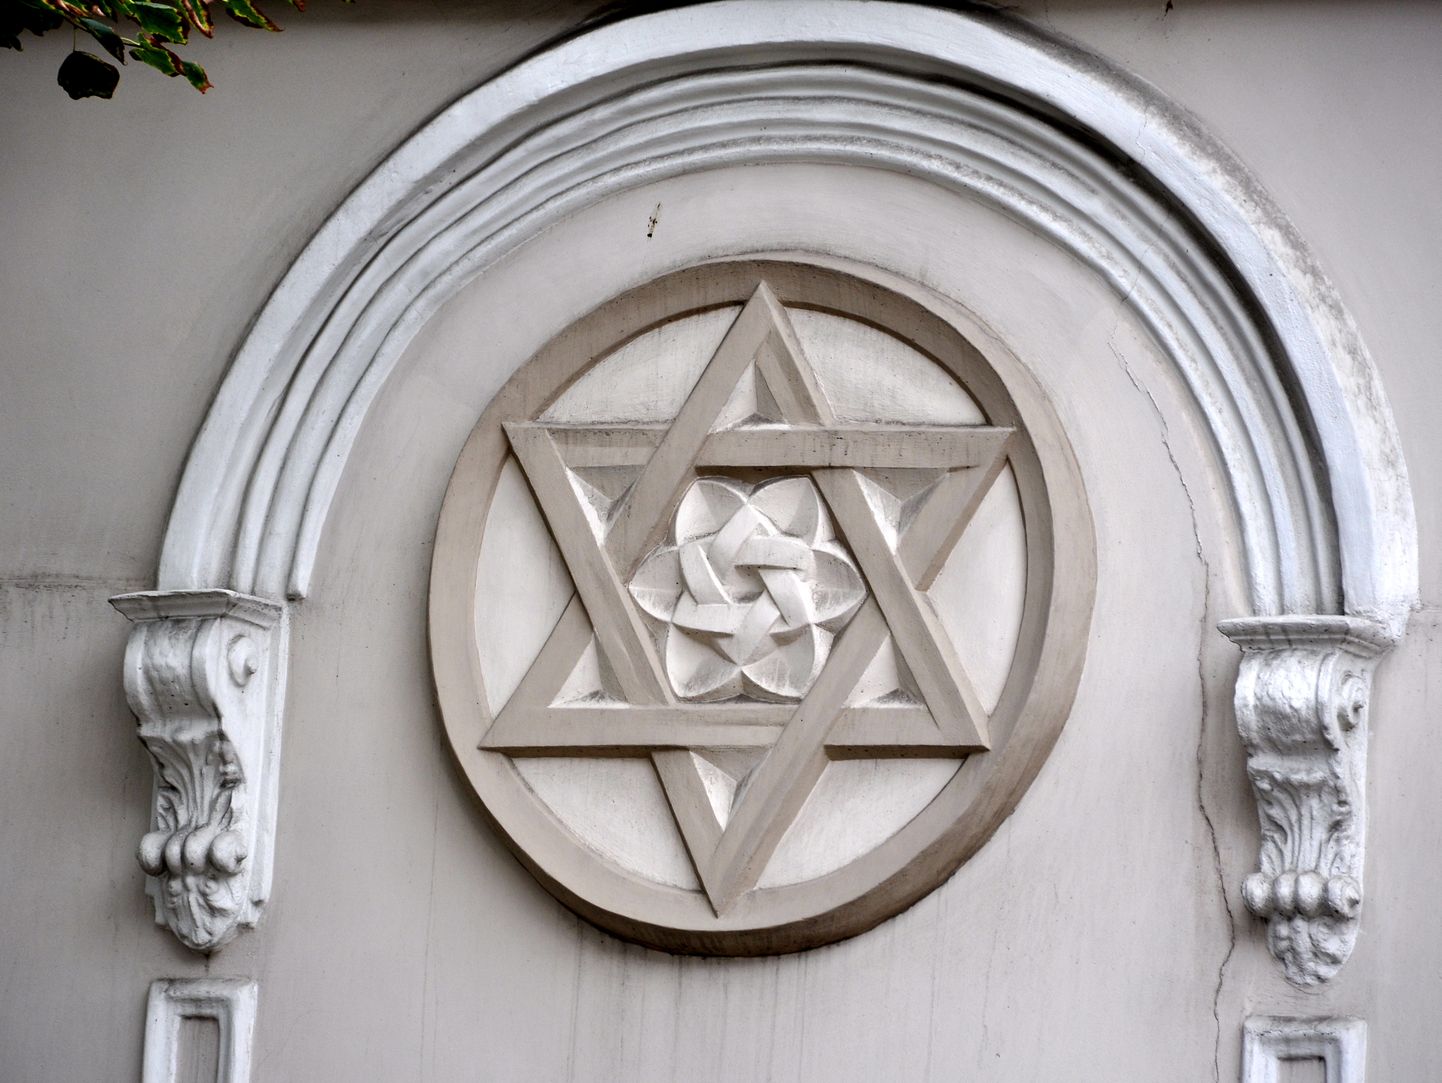 Dāvida zvaigzne pie sinagogas "Kadīša" Daugavpilī.